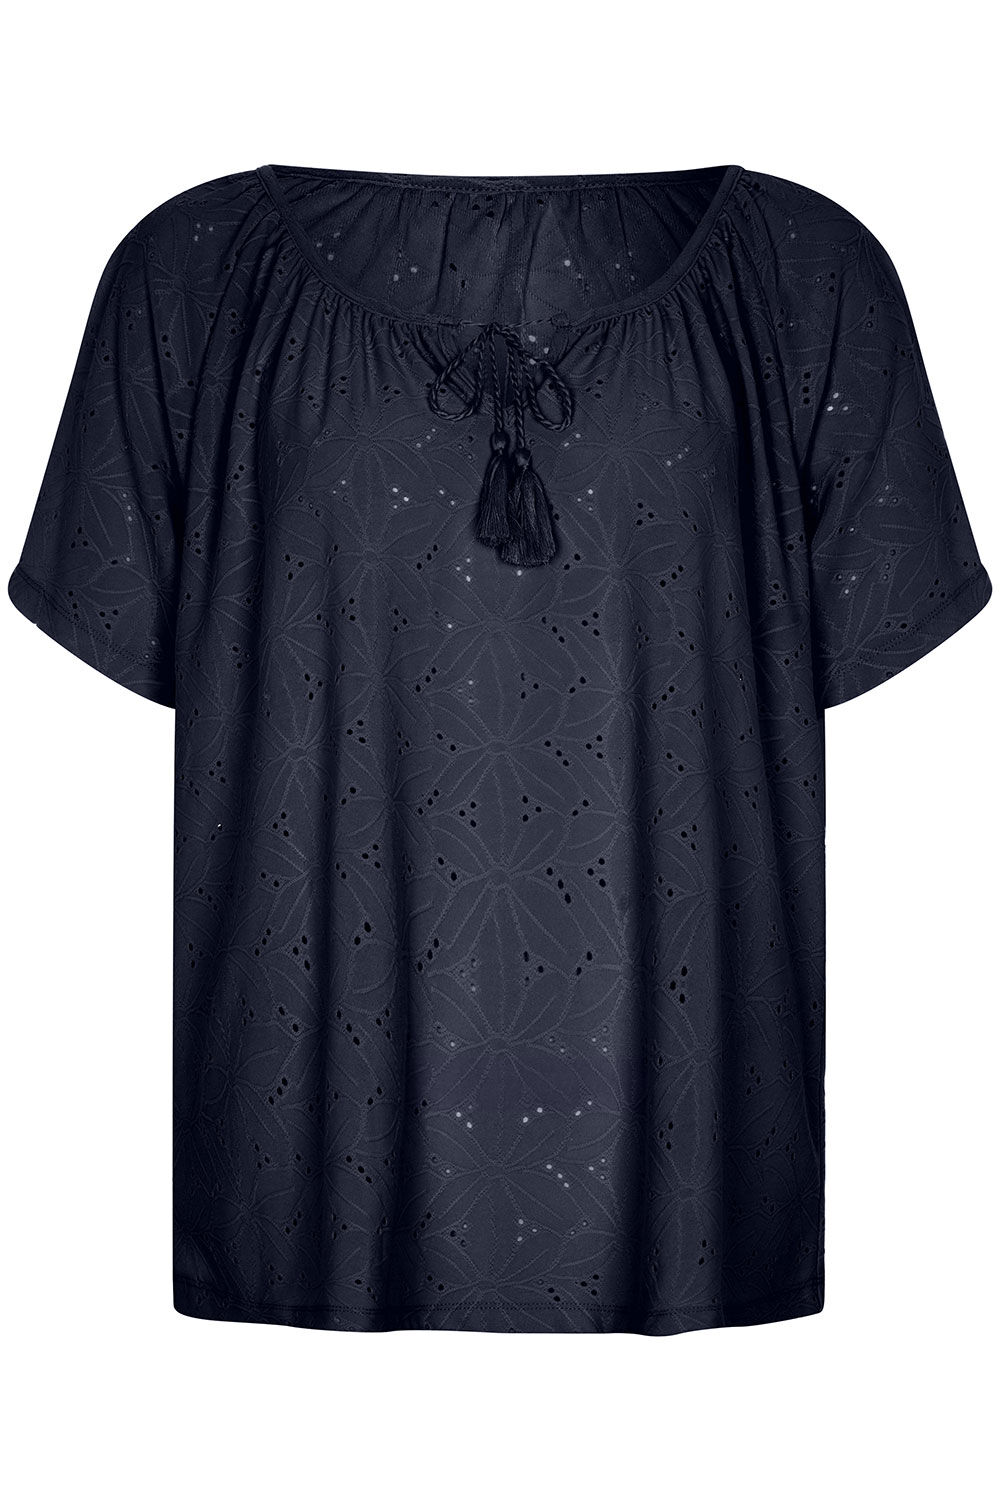 Bonmarche Navy Short Sleeve Broderie Design Jersey T-Shirt, Size: 20